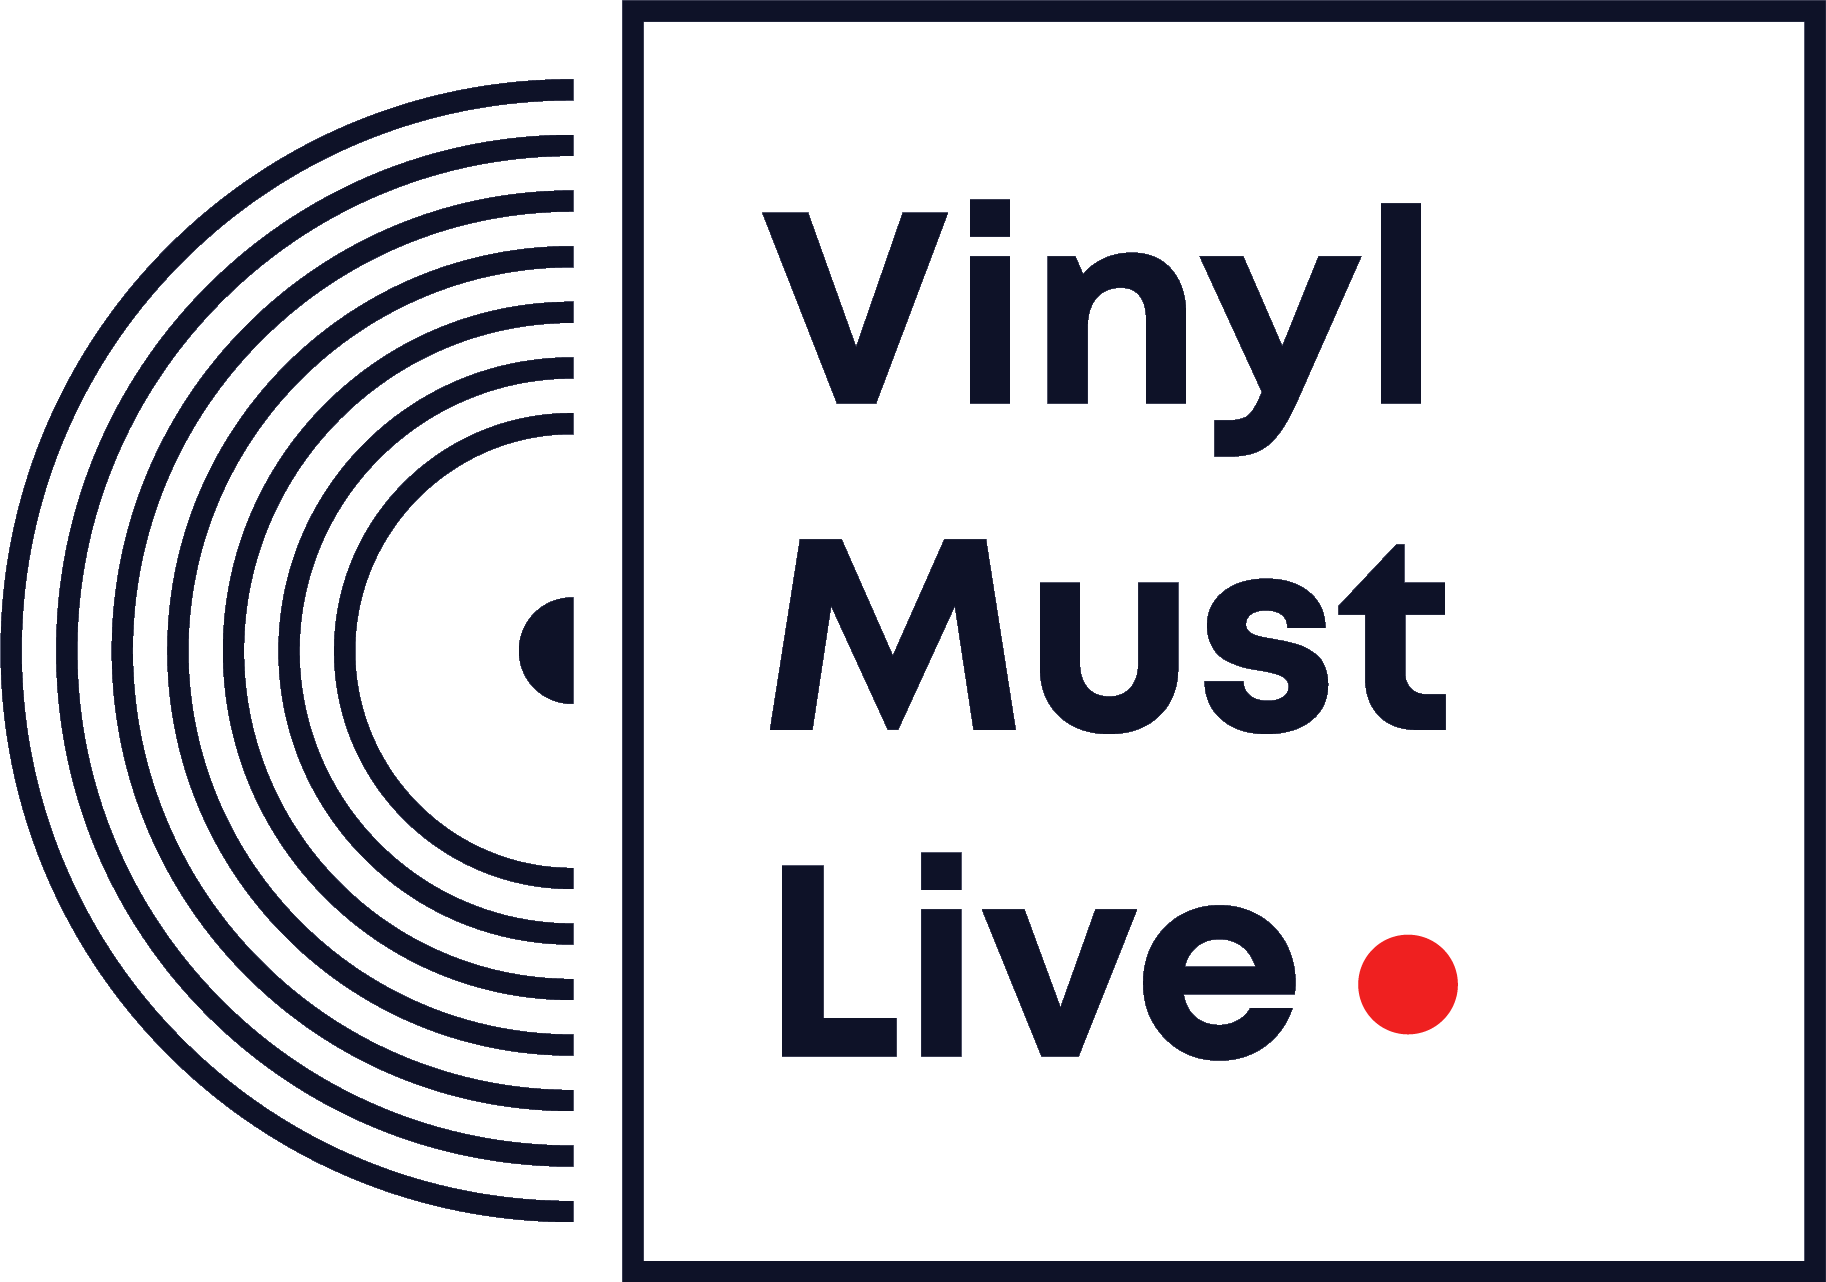 Vinyl Must Live